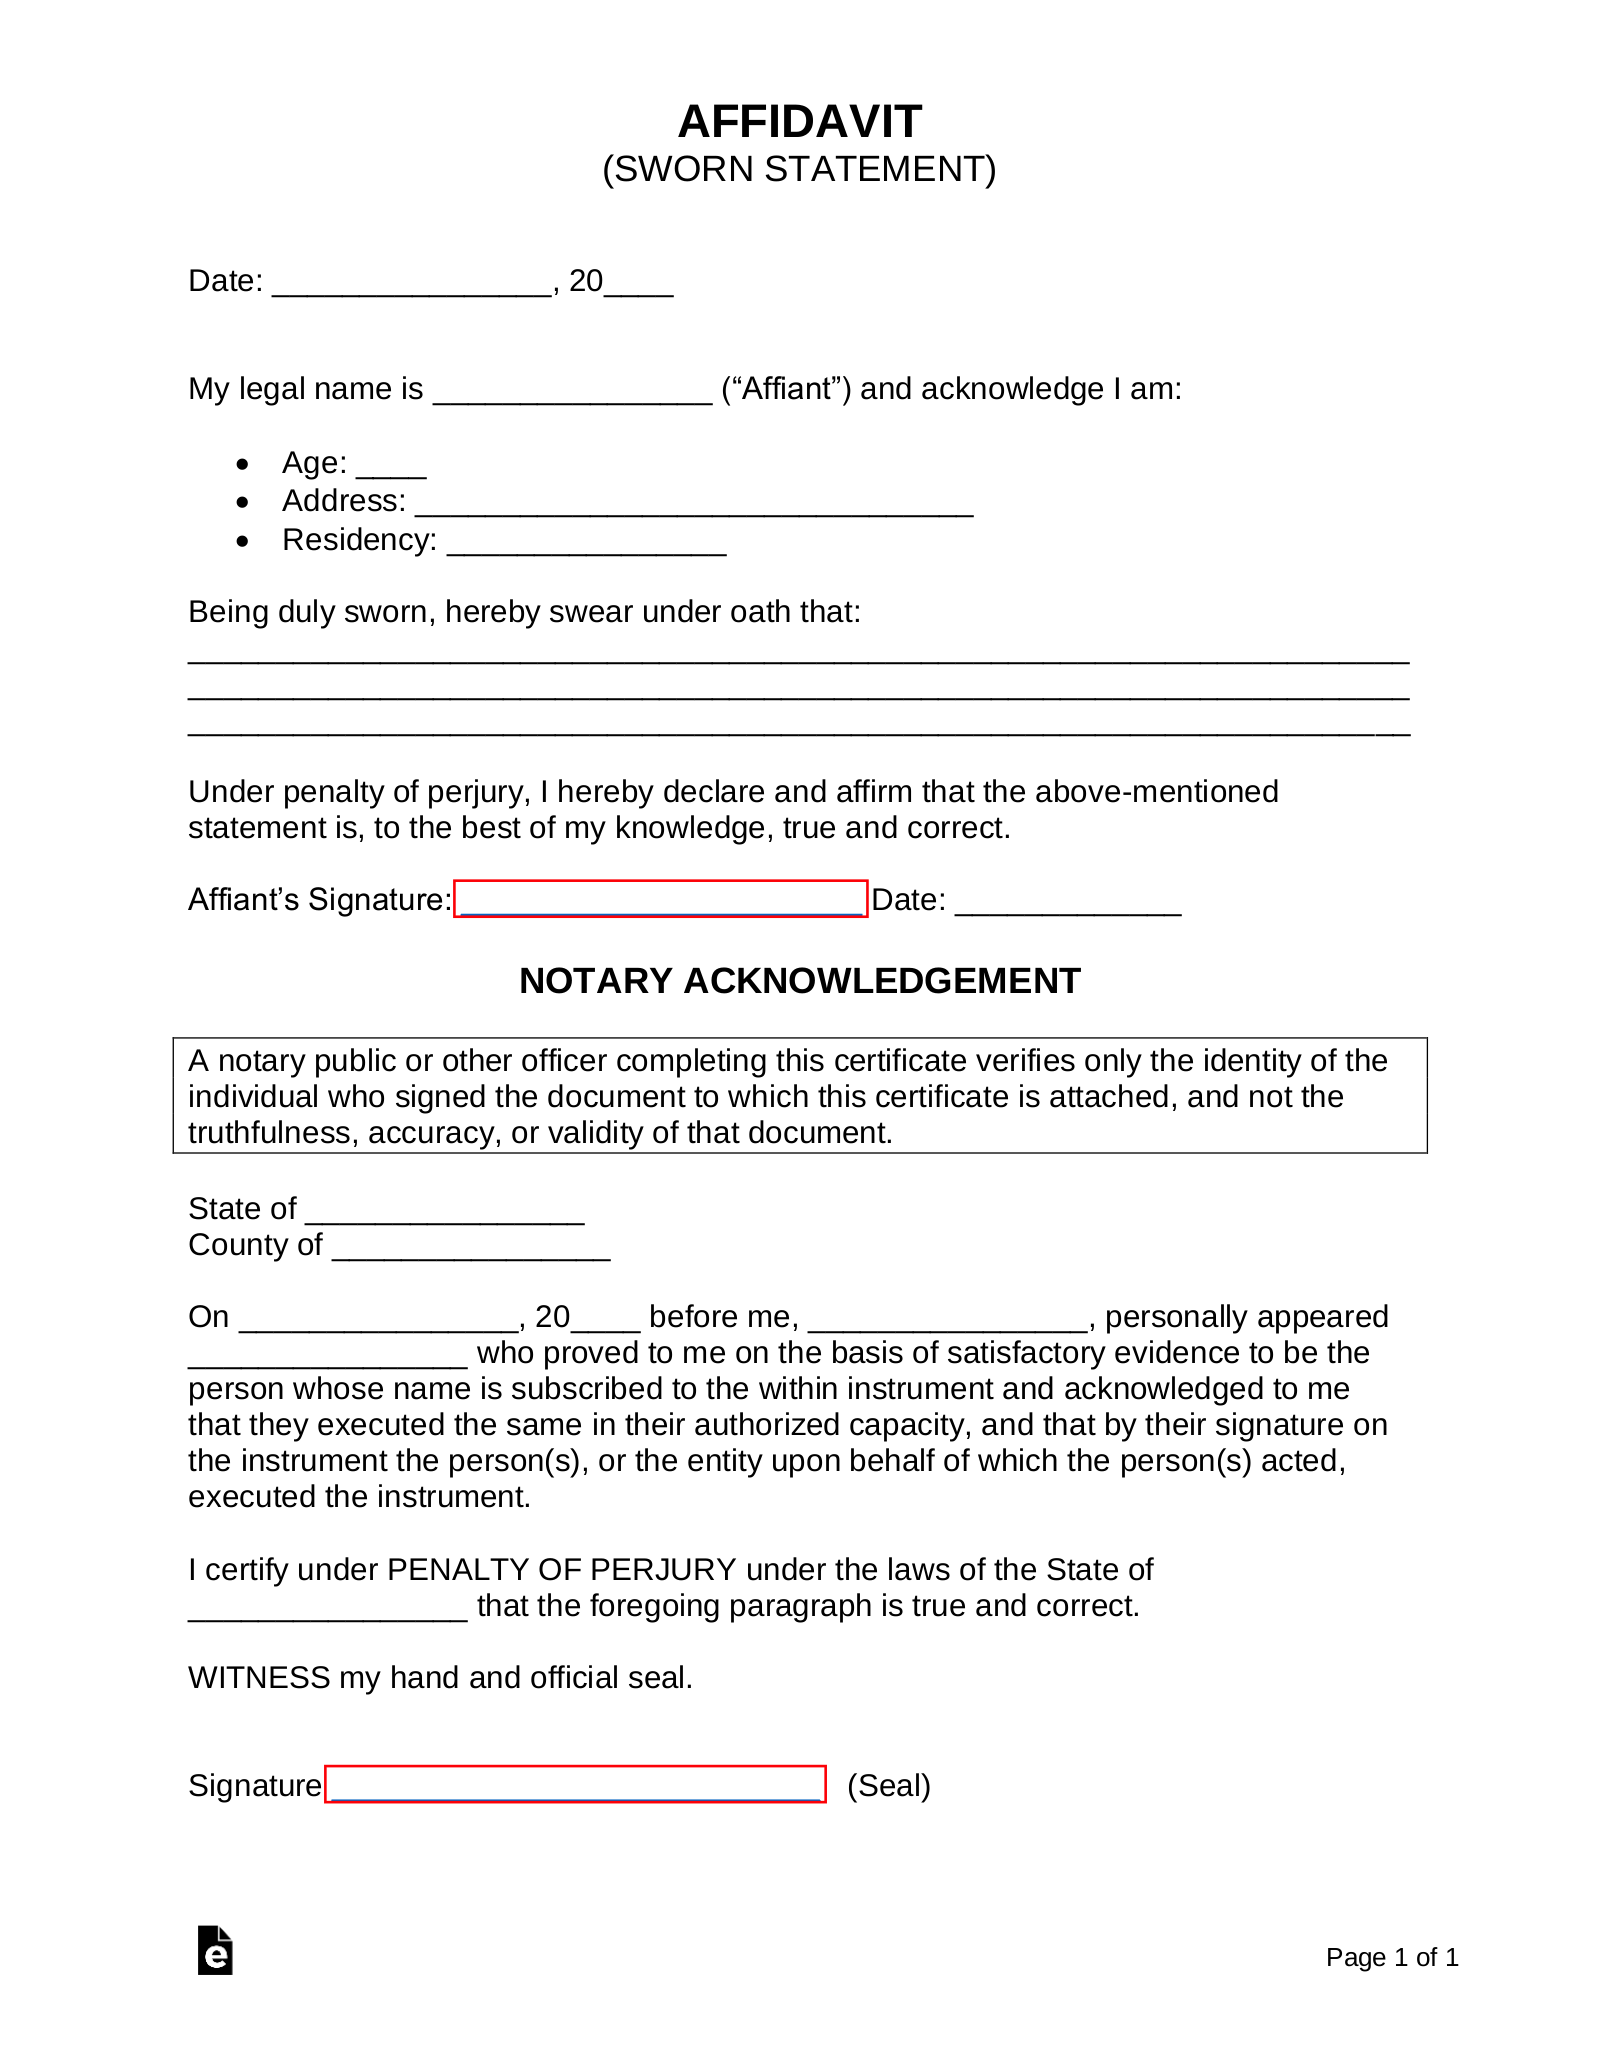 Free Blank Affidavit Template (Sworn Statement) - Word  PDF – eForms Inside Blank Legal Document Template